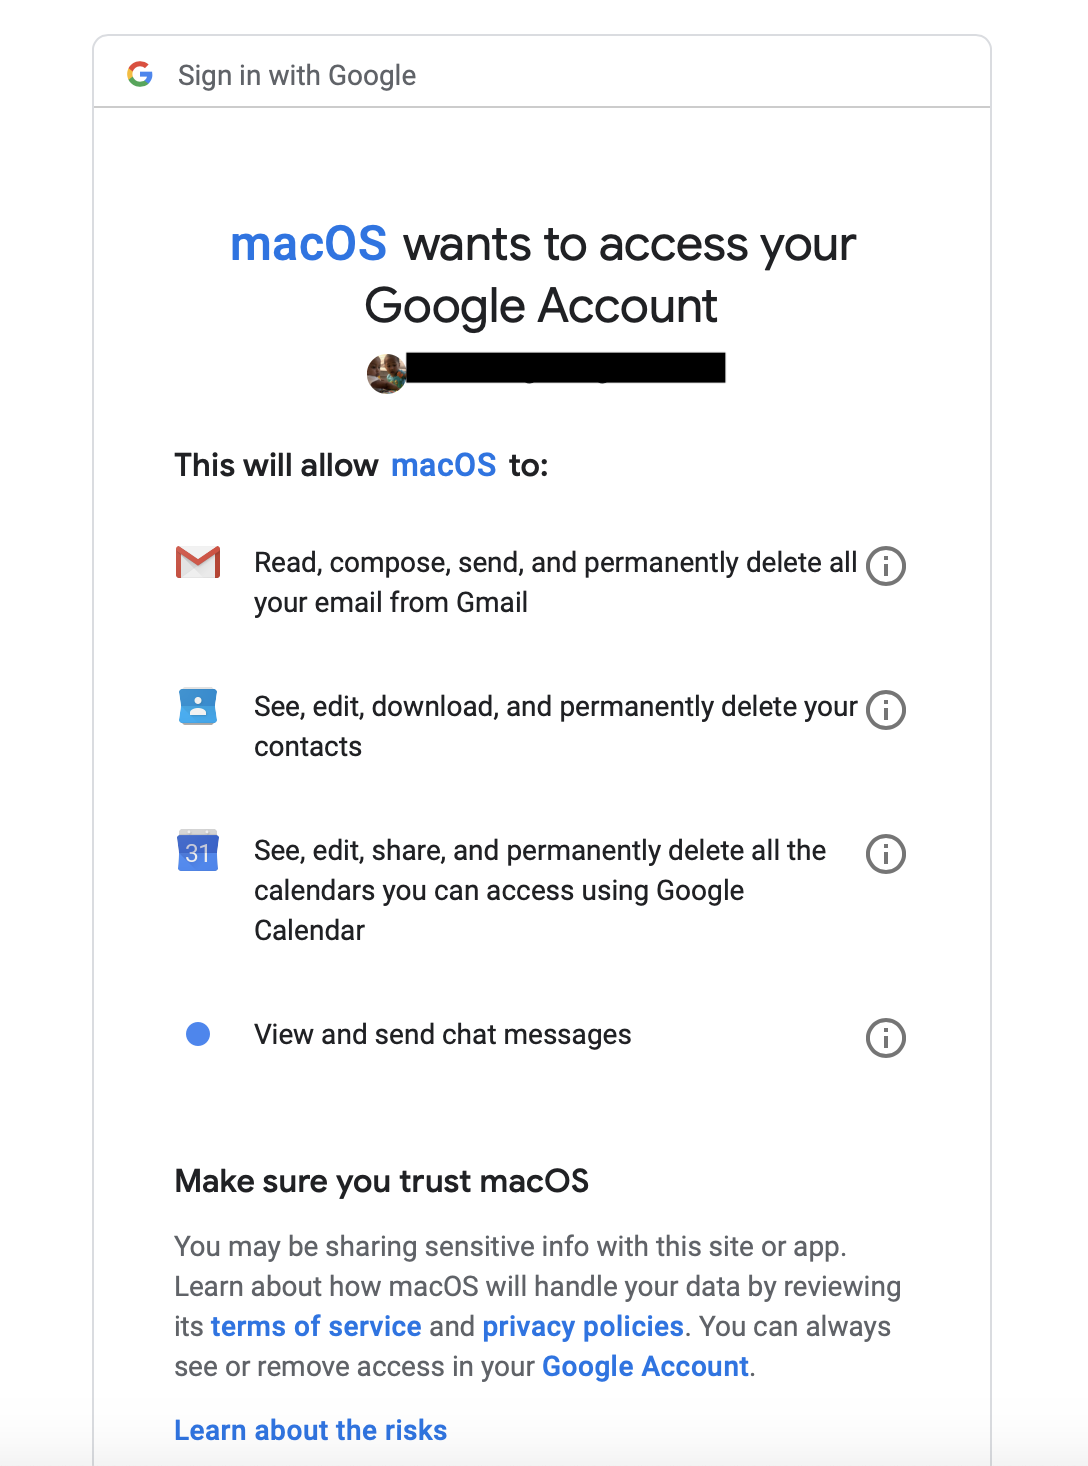 macos wants full access to google